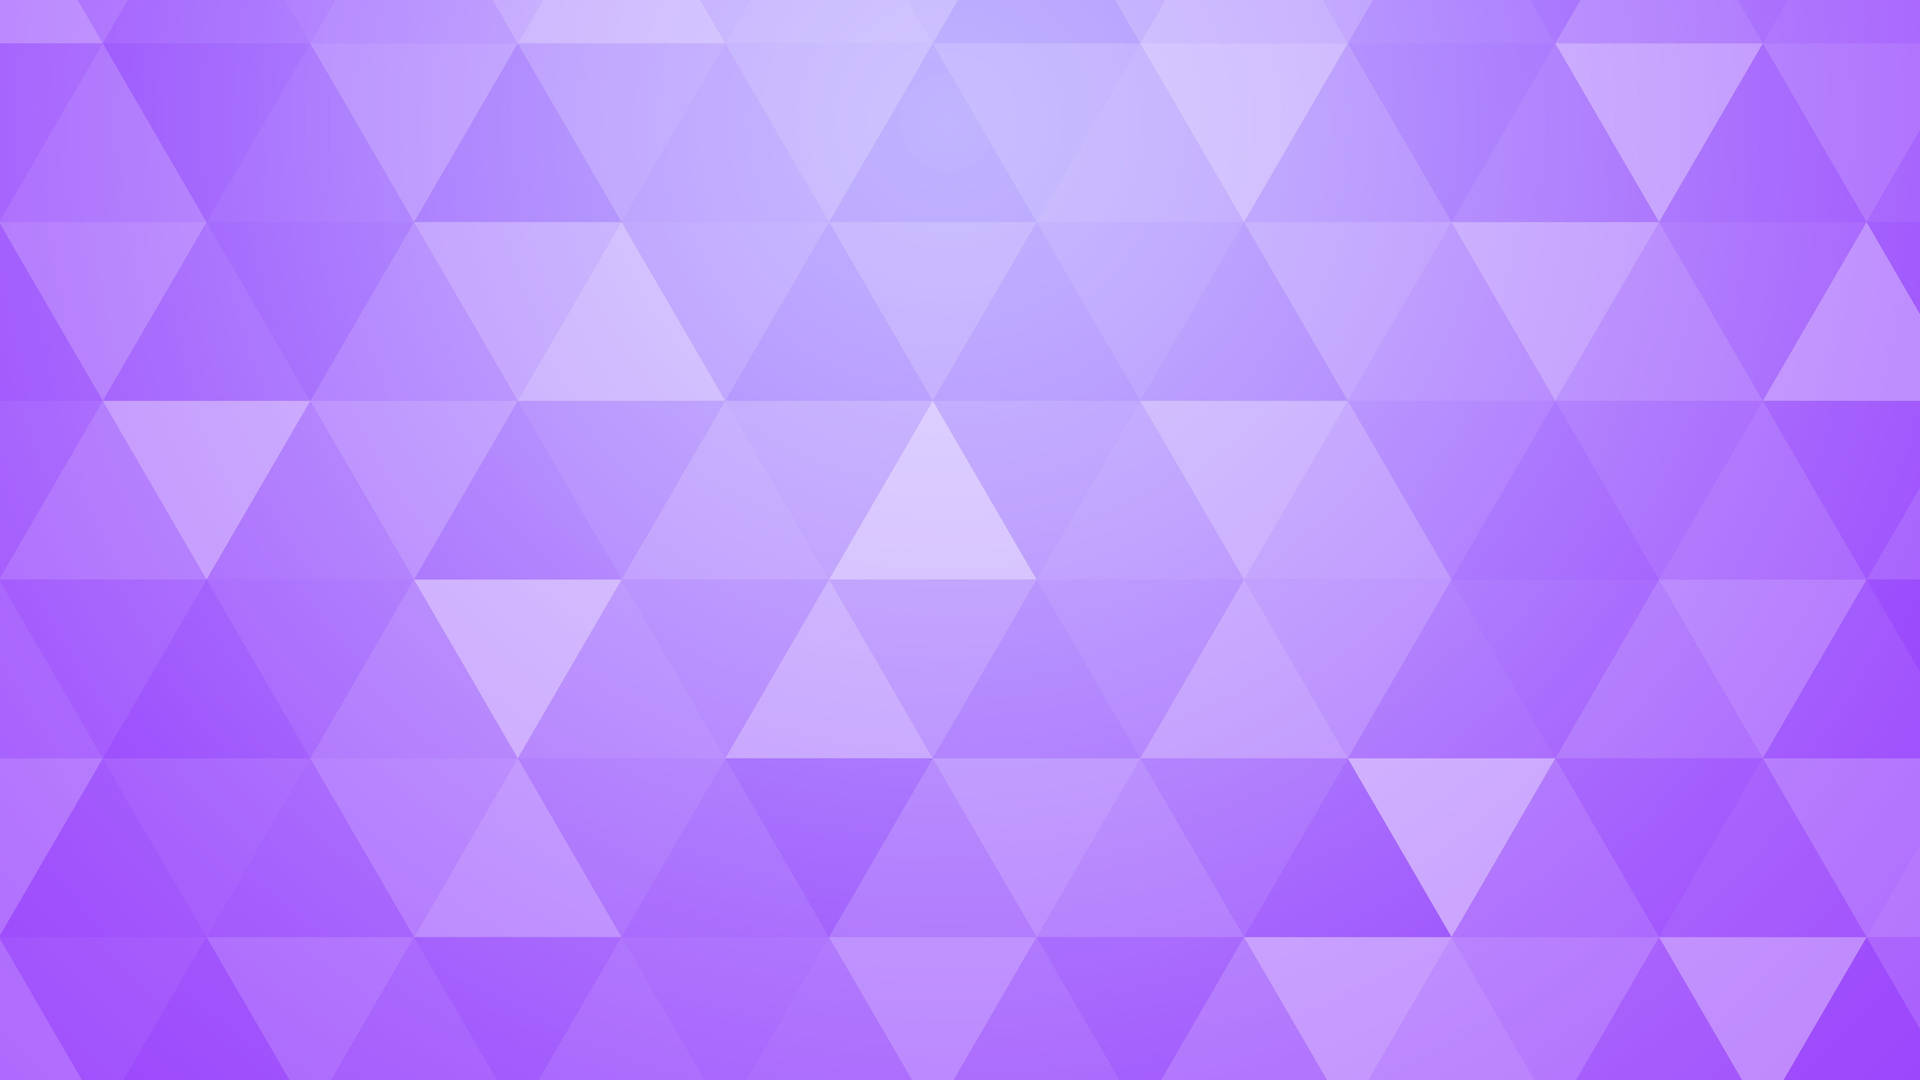 Violet Aesthetic Triangular Geometric Shapes Background